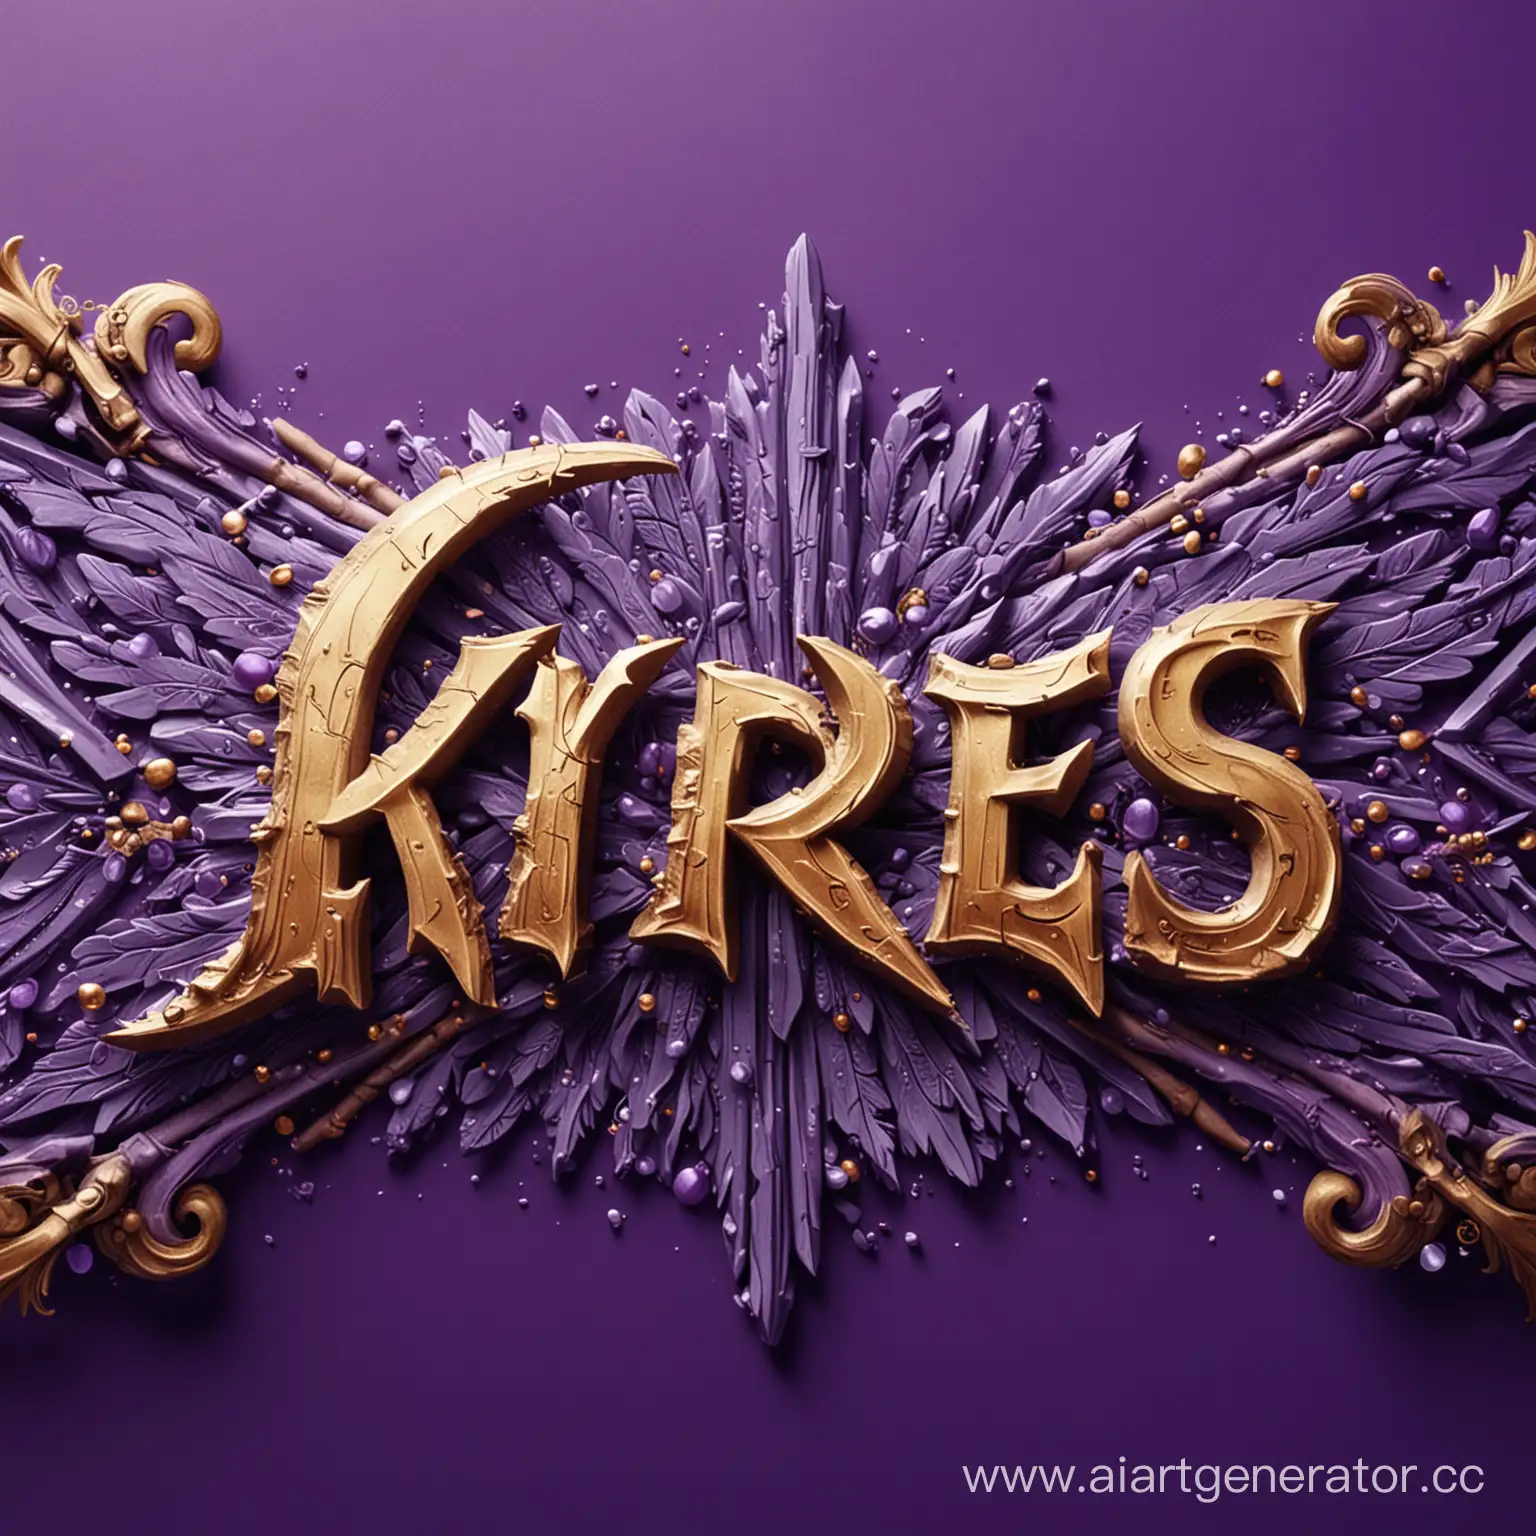 Vibrant-4K-Purple-Background-with-KyreS-Inscription